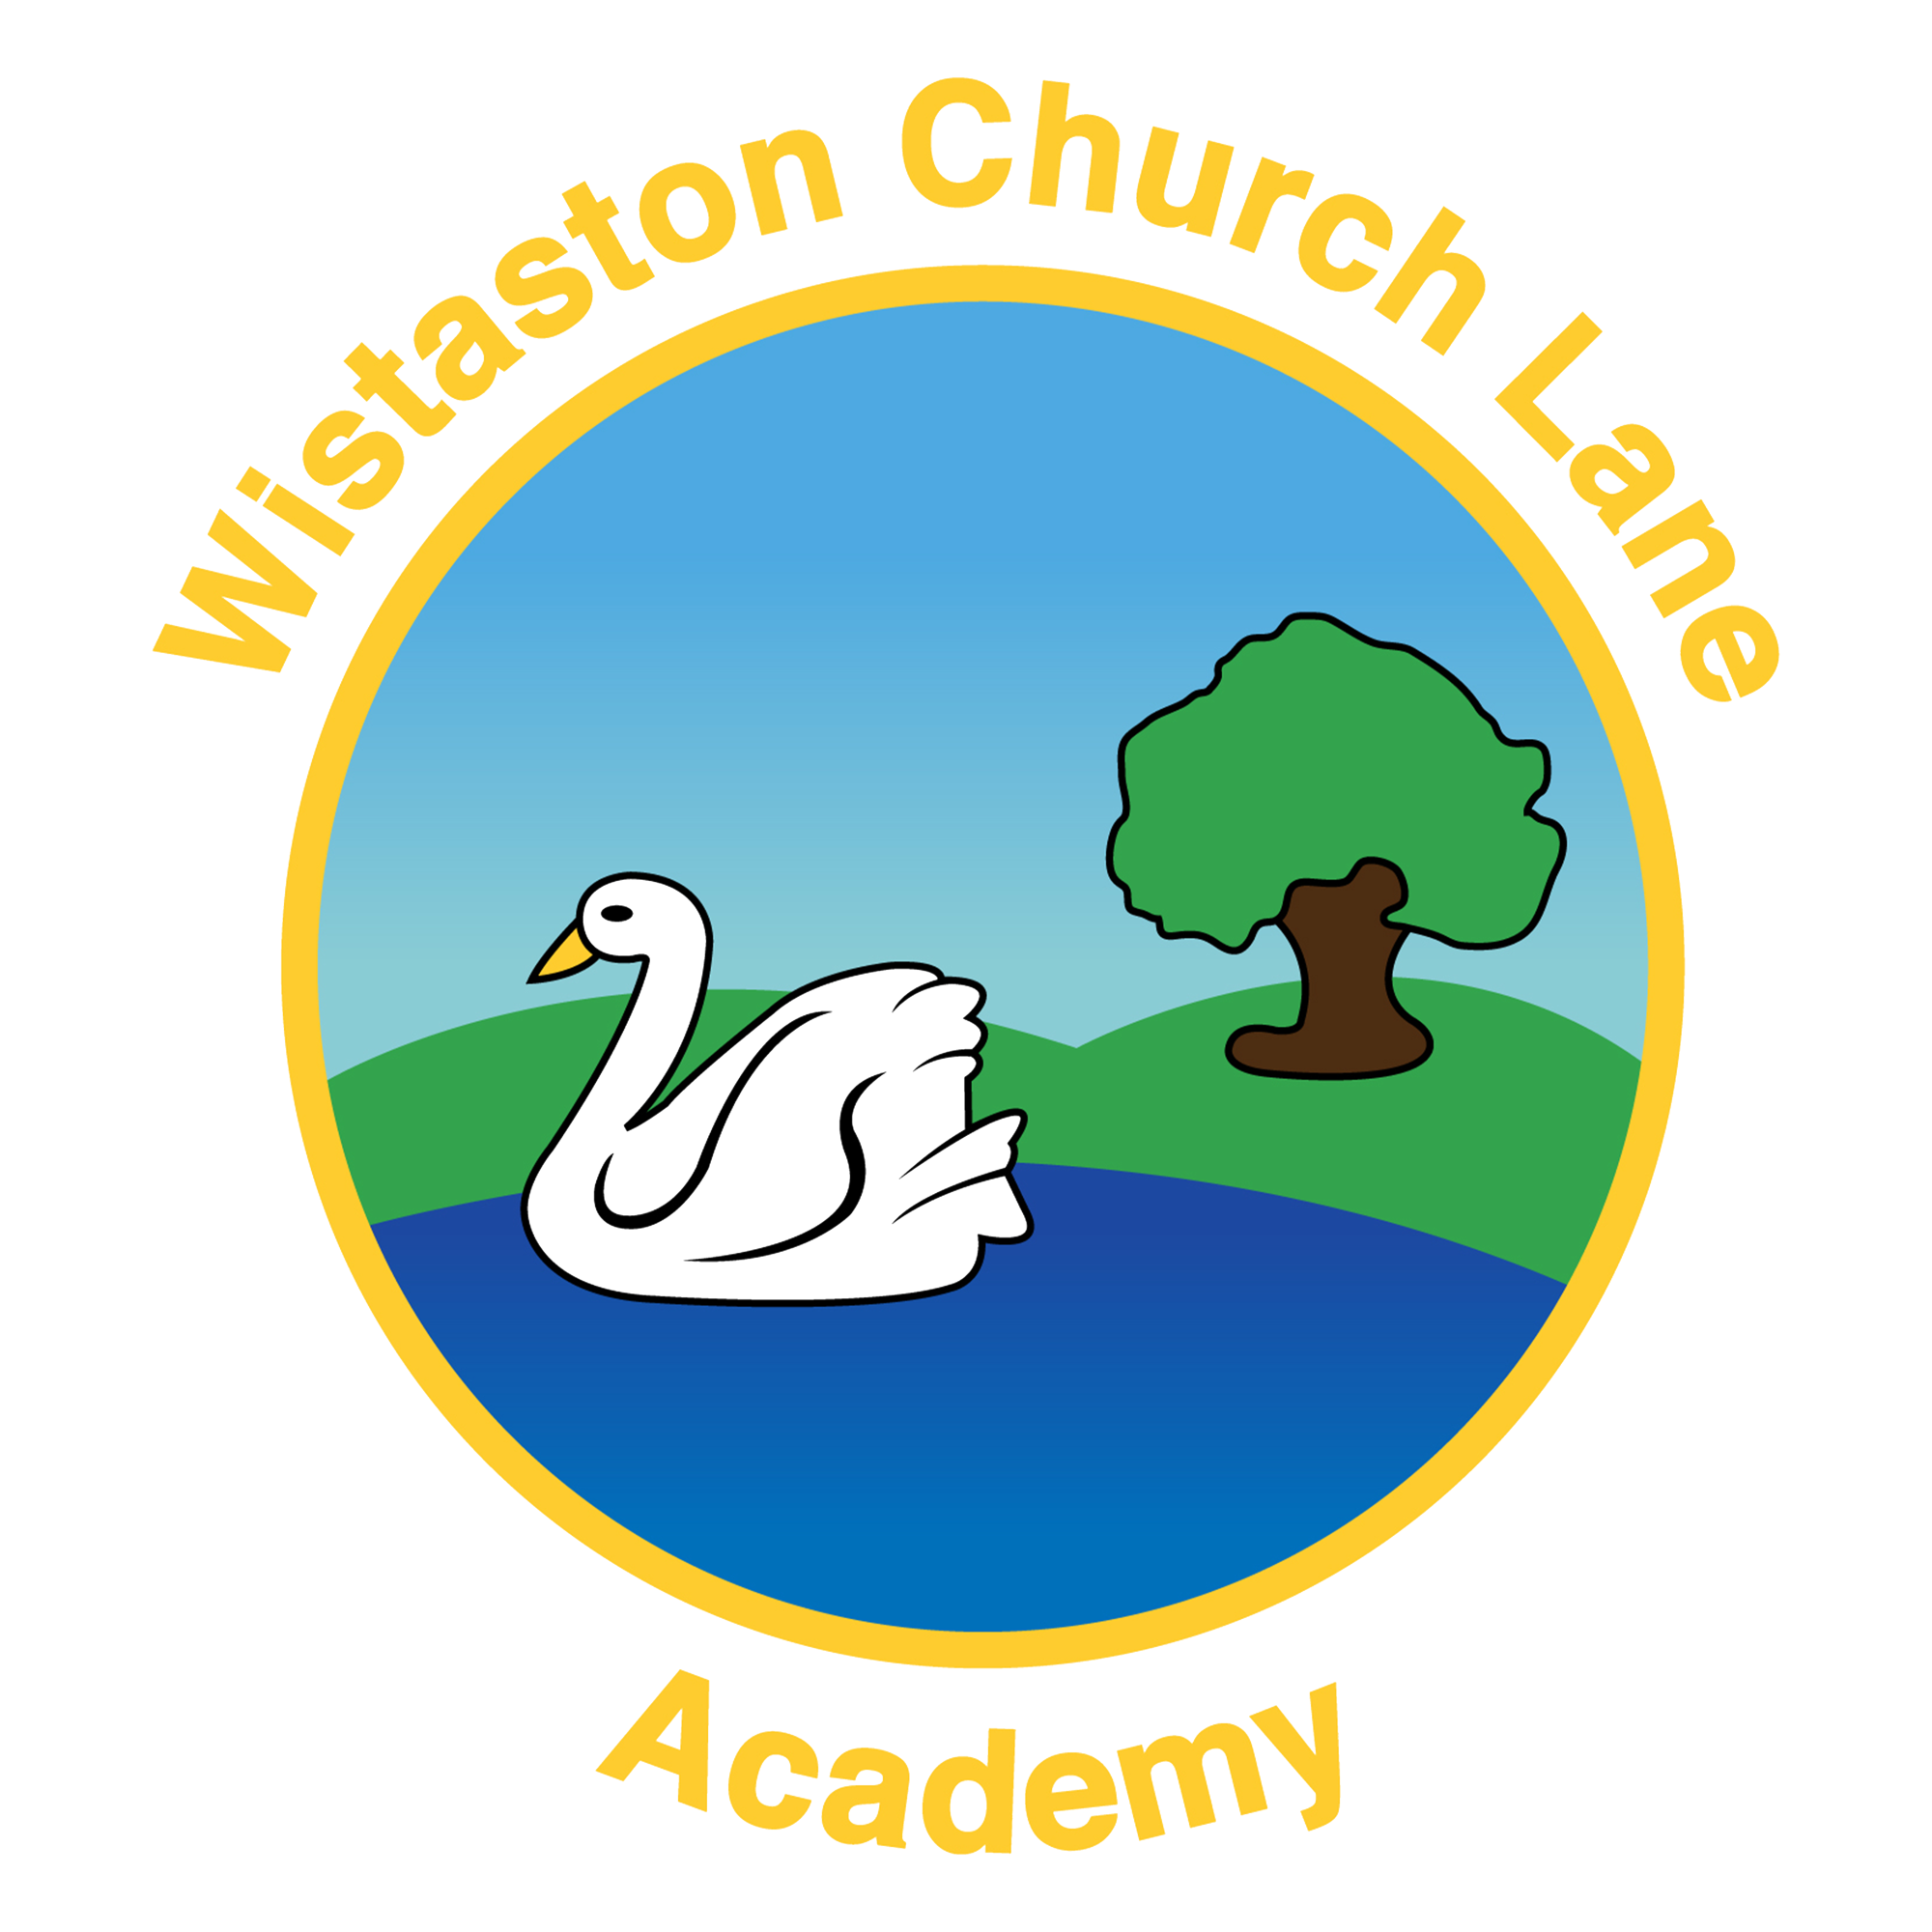 Wistaston Church Lane Academy School